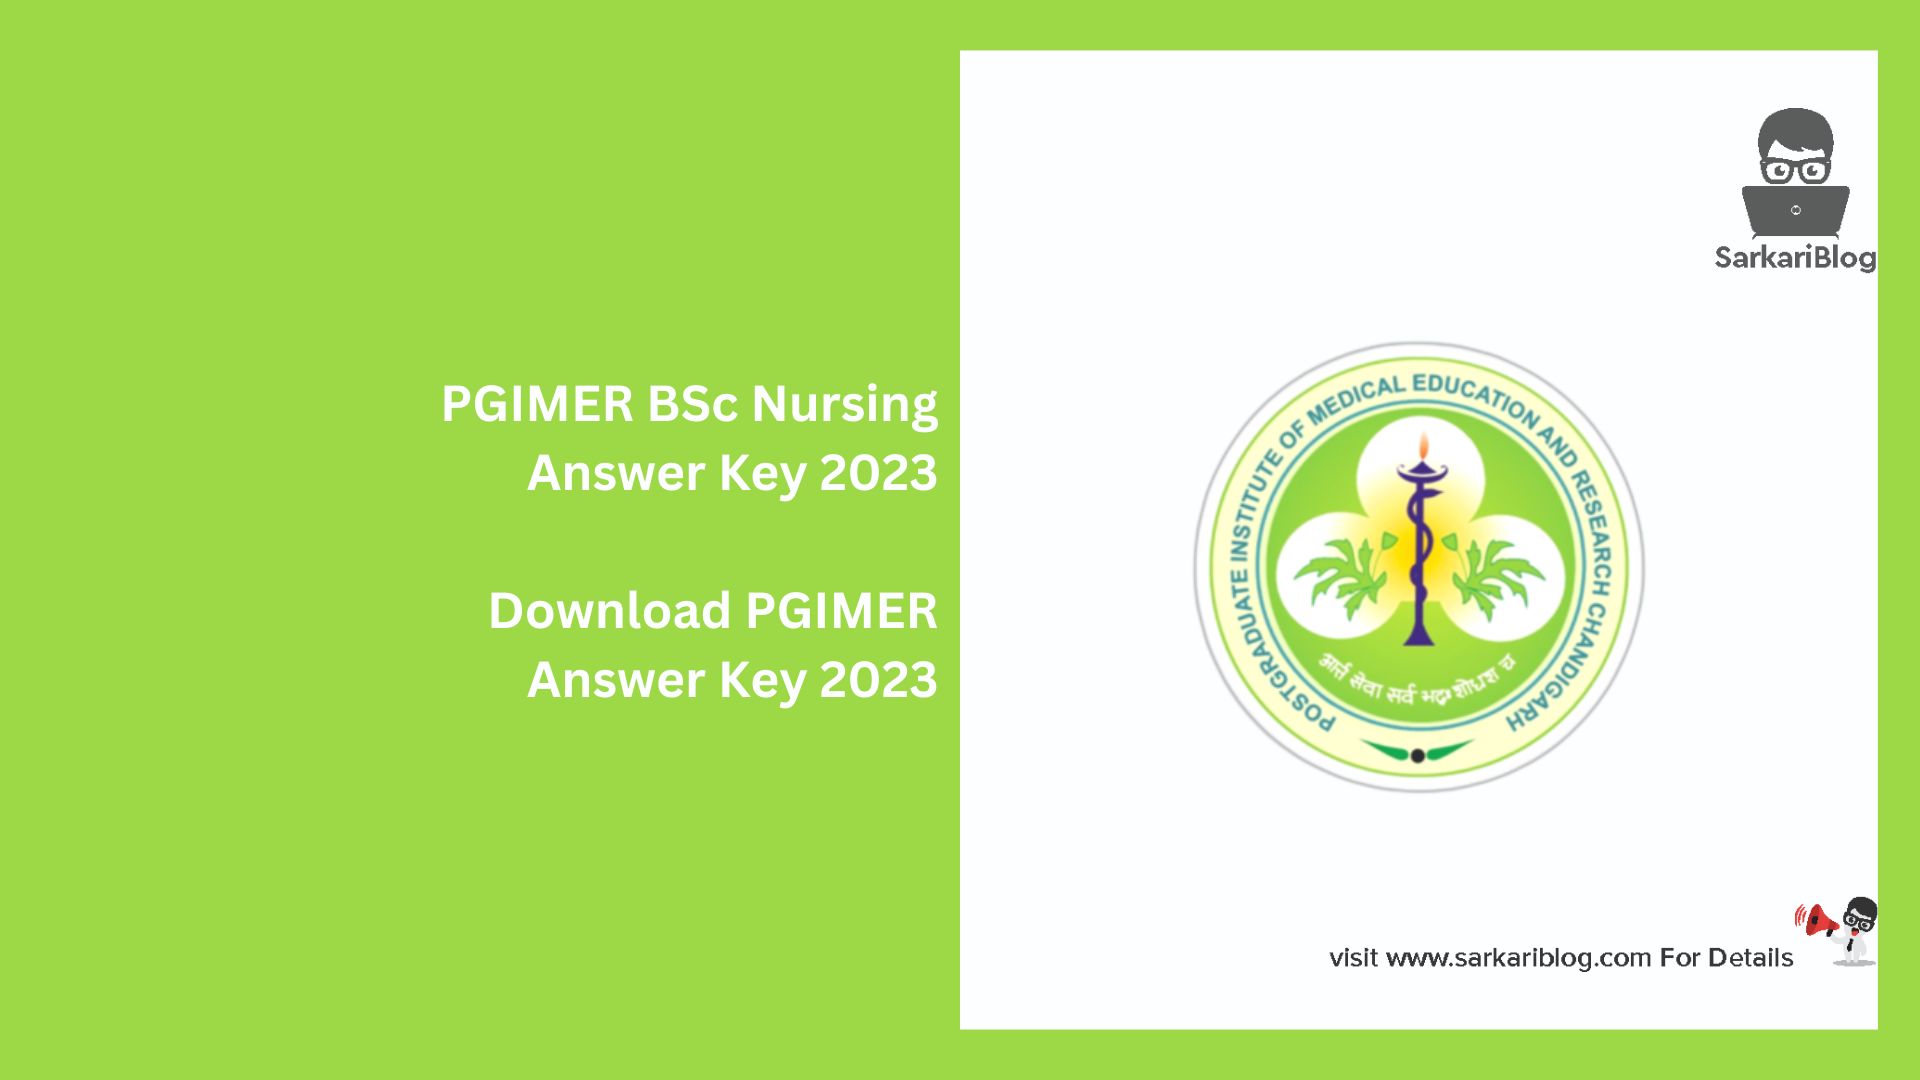 PGIMER BSc Nursing Answer Key 2023